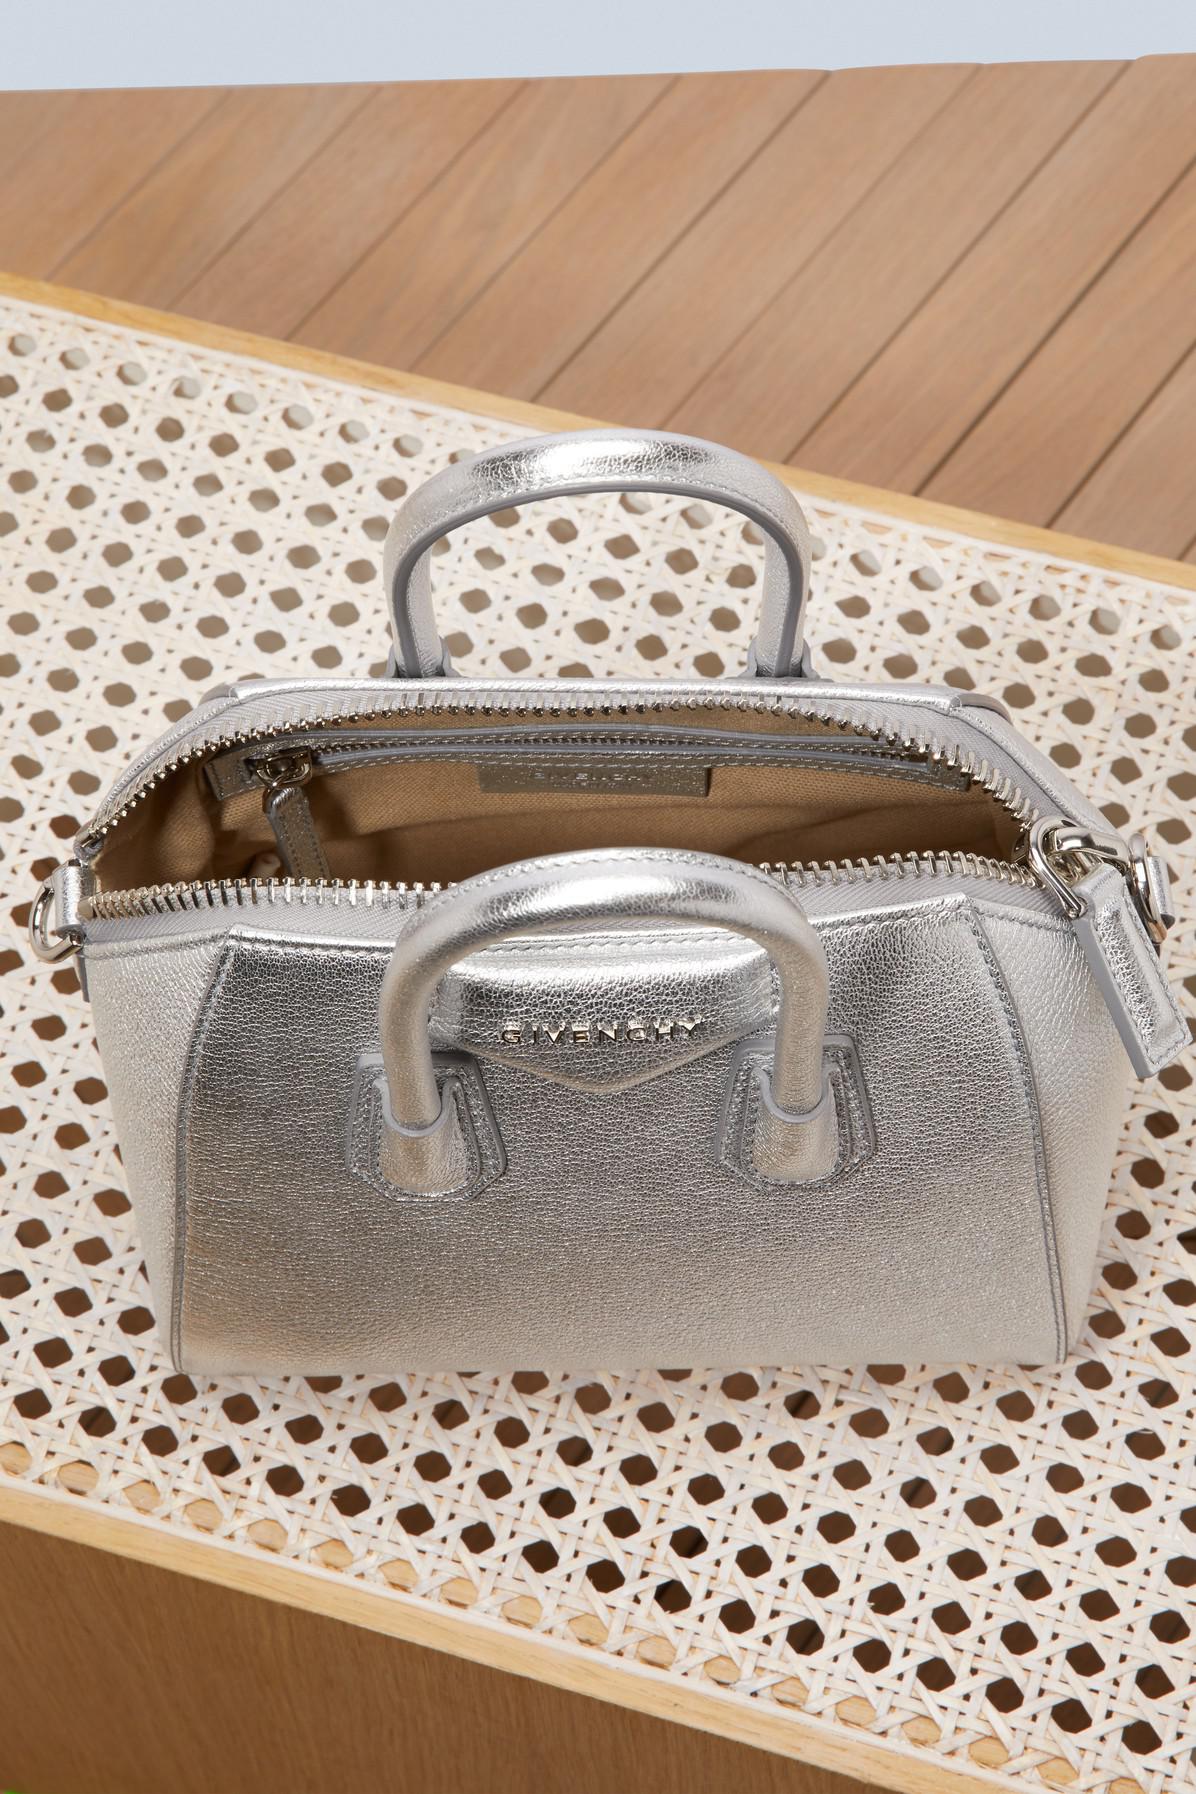 Givenchy Leather Antigona Mini Bag in Silver (Metallic) - Lyst